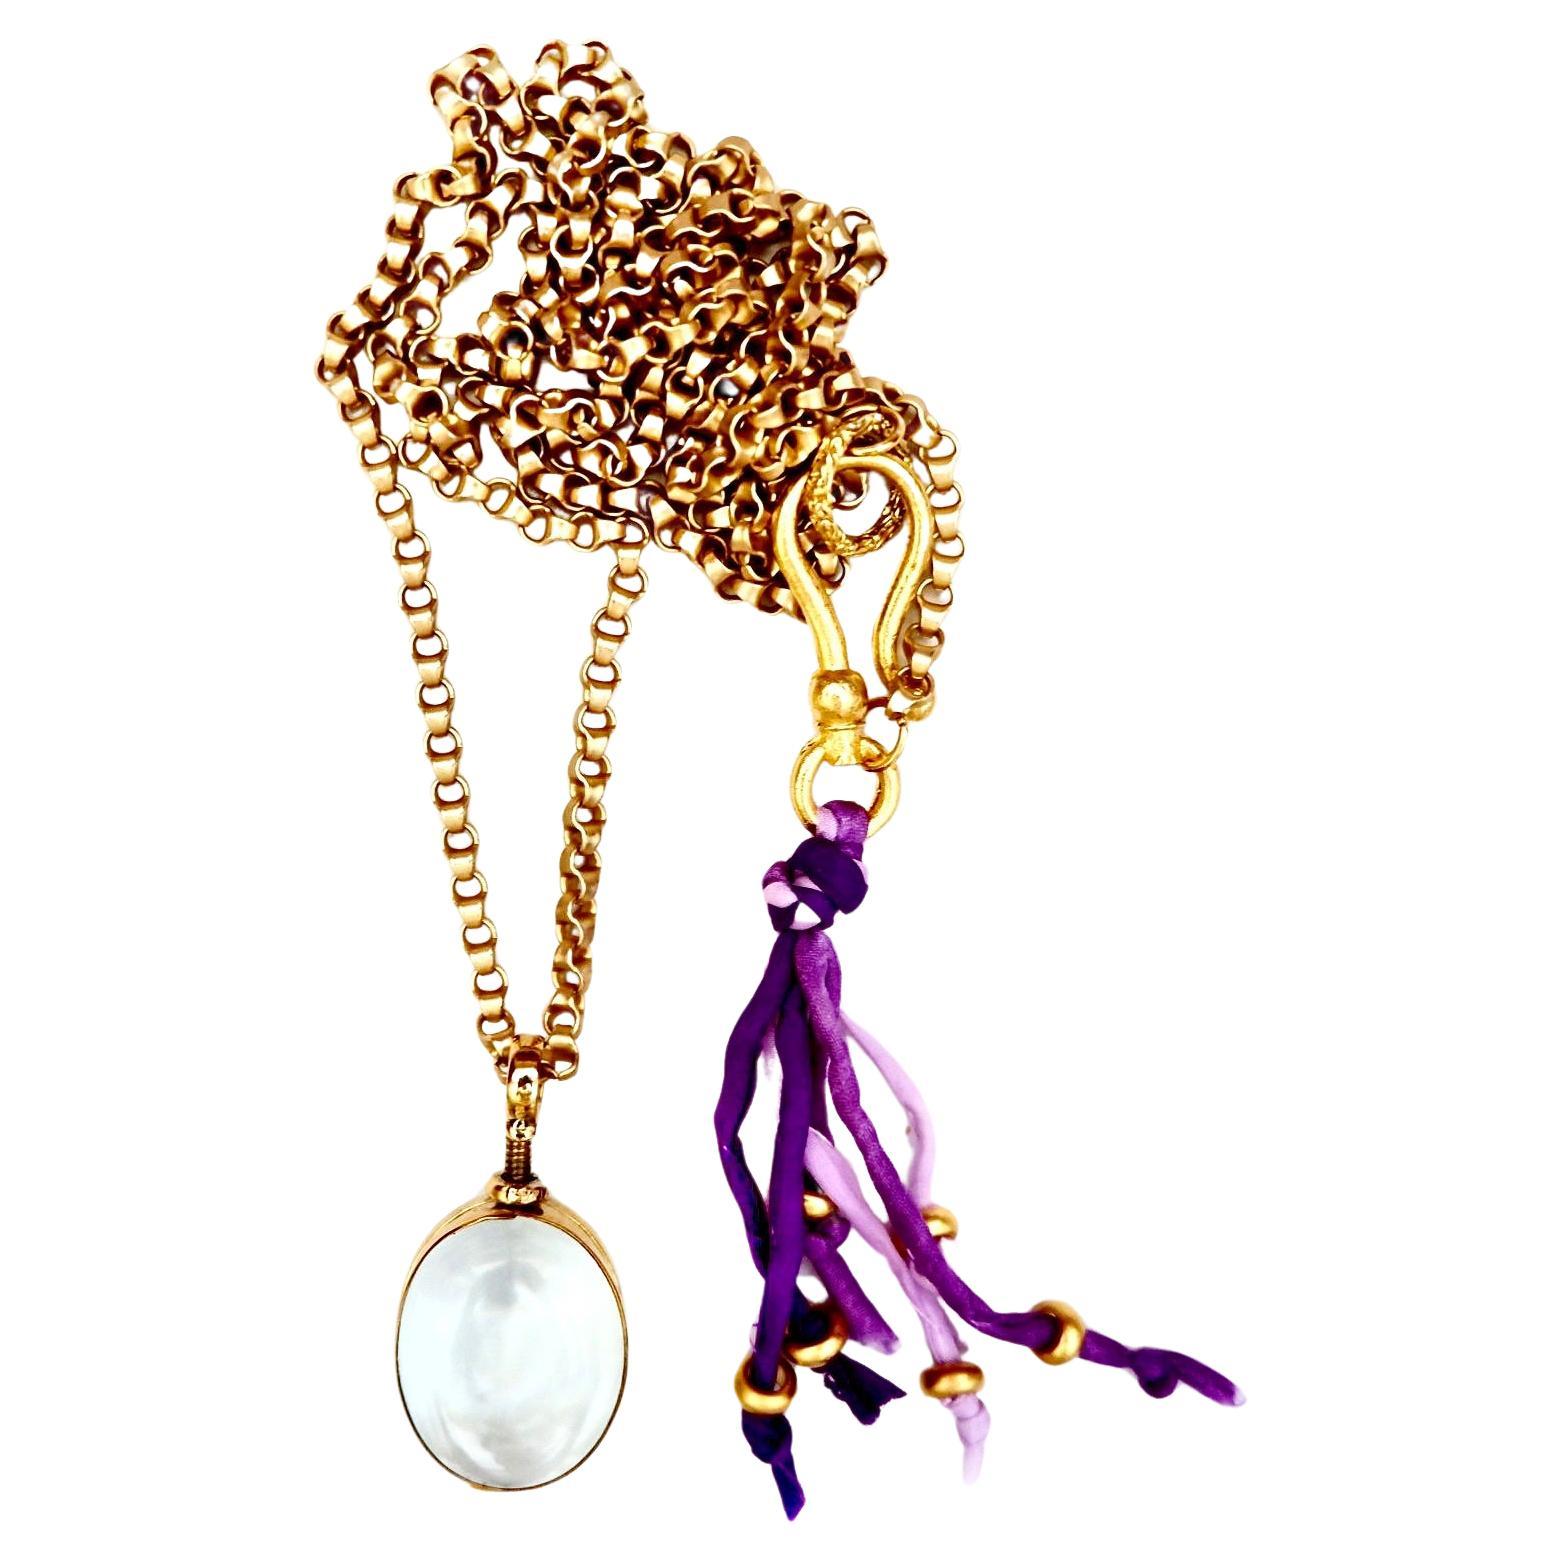 Vintage Brass Chain Vintage Glass Oval Locket Necklace For Sale